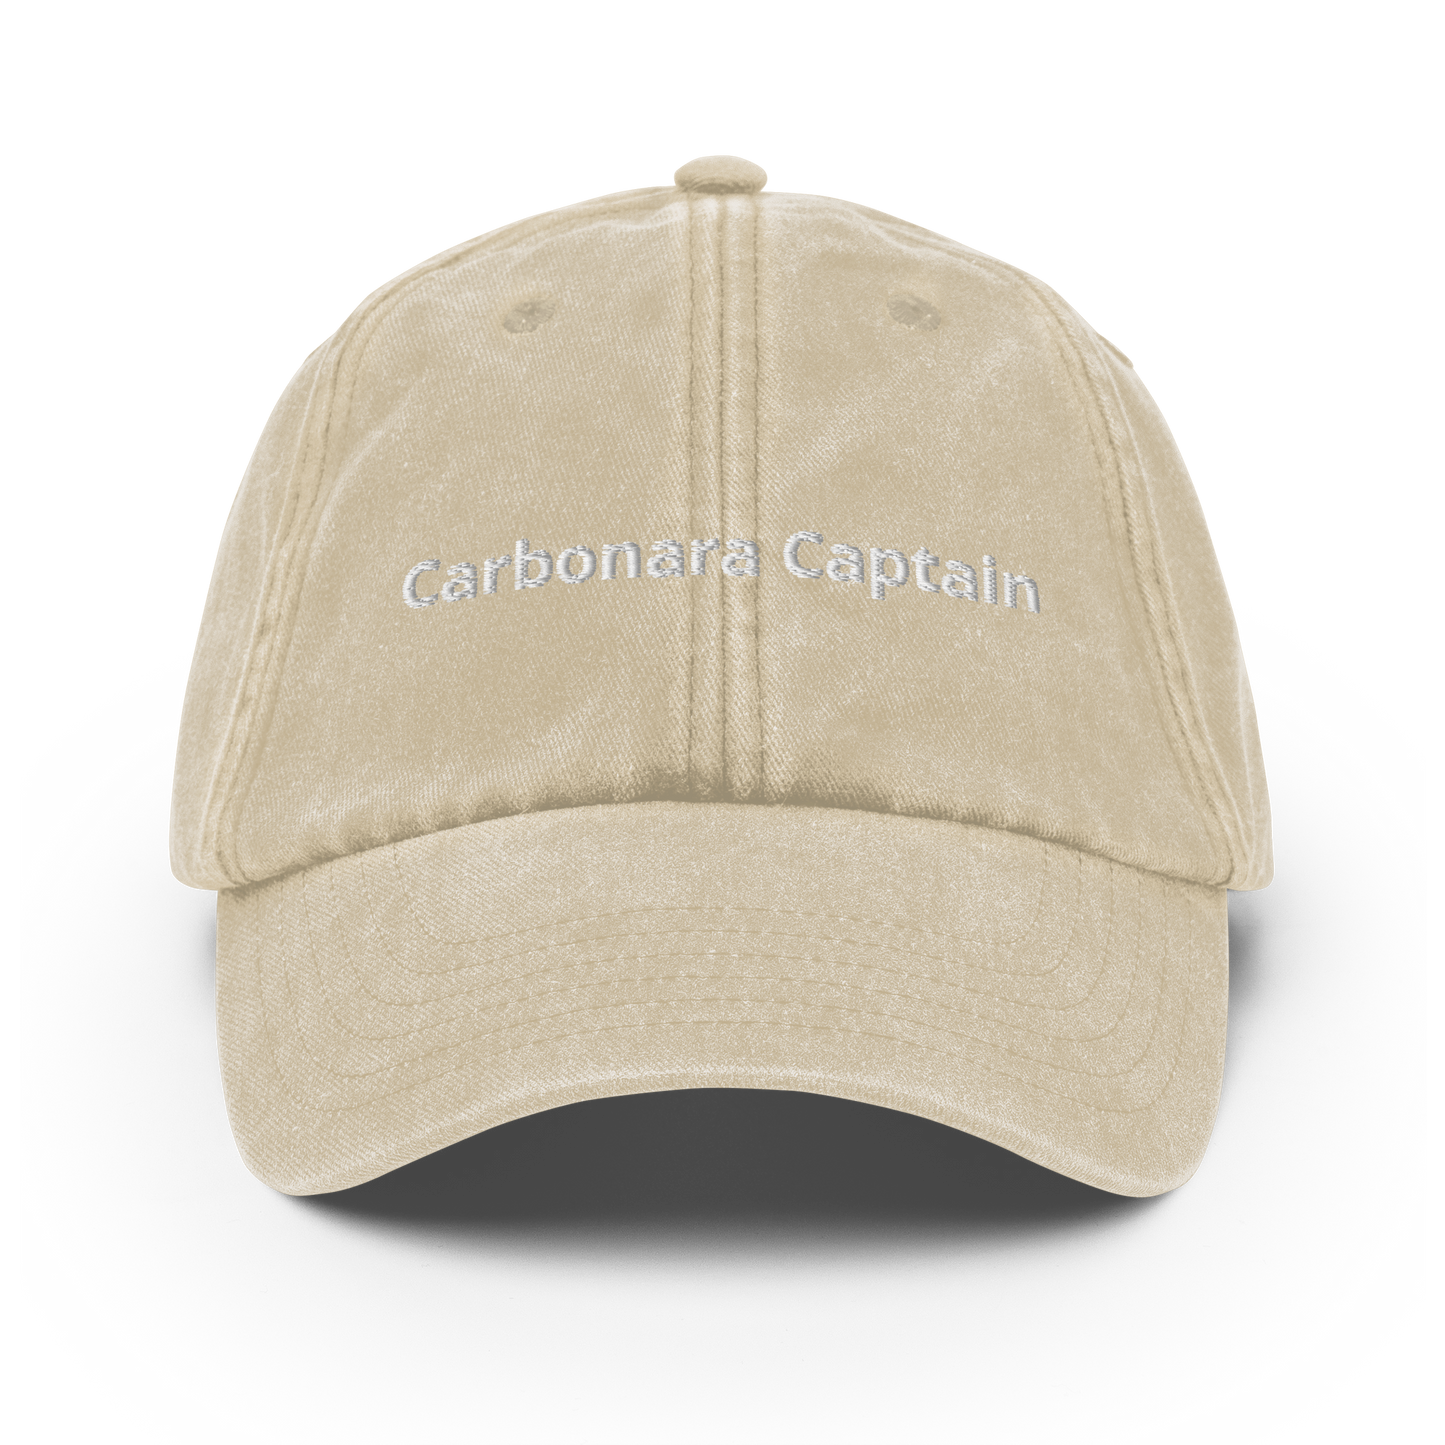 Carbonara Captain - Vintage Hat